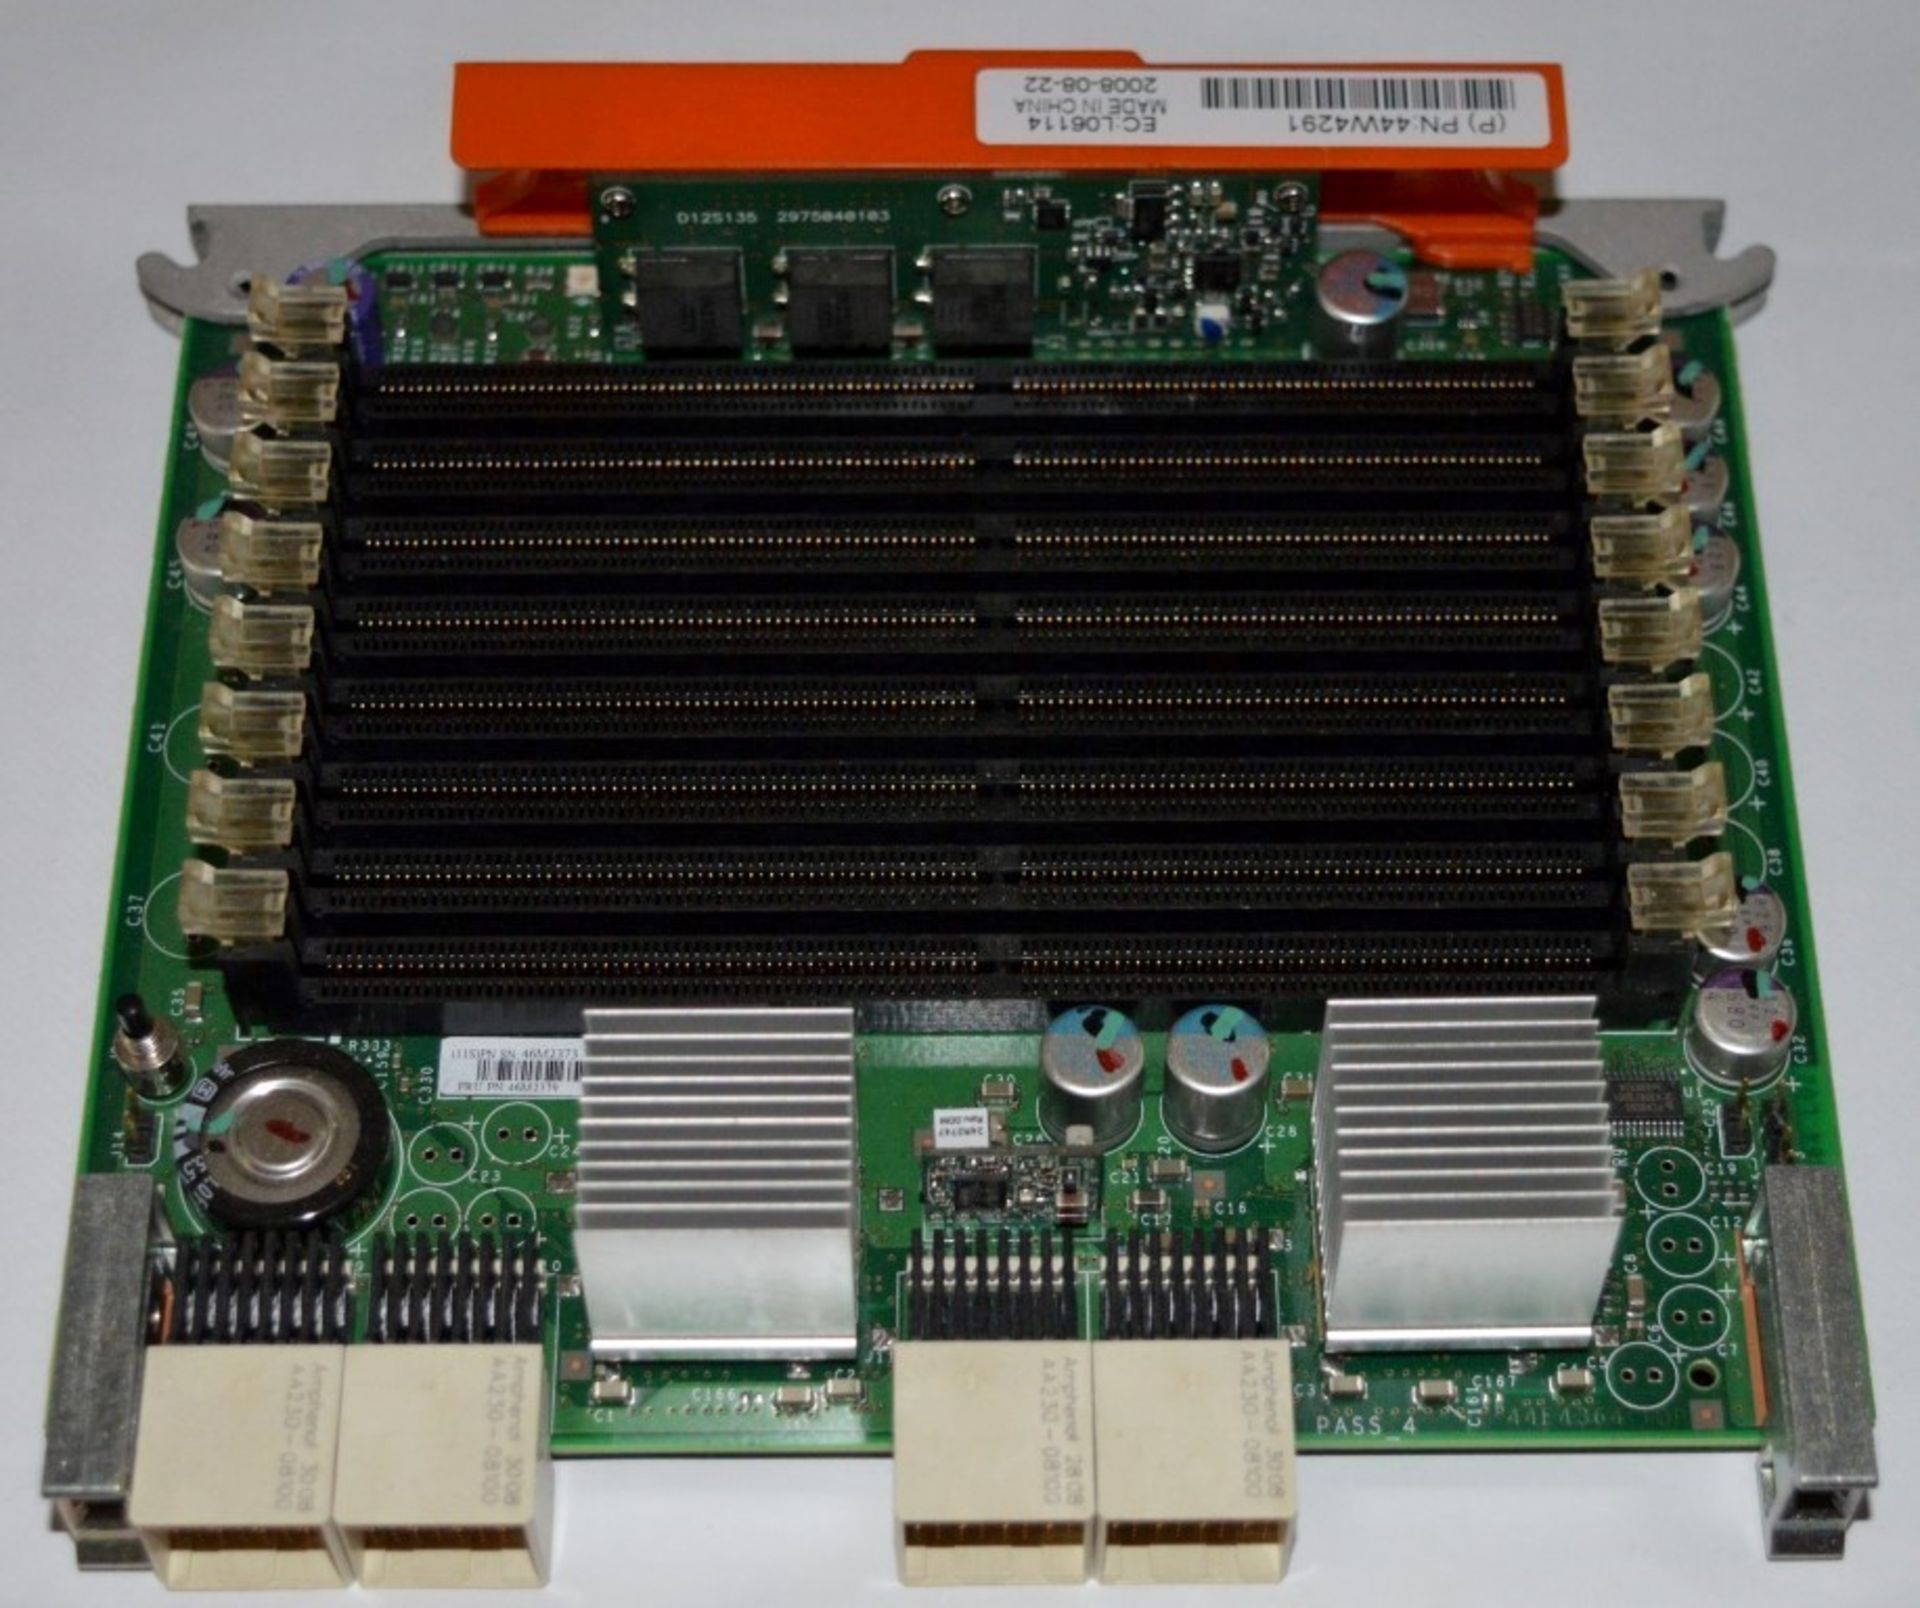 6 x IBM X-Series X3850 X3950 M2 Server RAM Expansion Modules - Part No: 44W4291 43W8672 - Removed